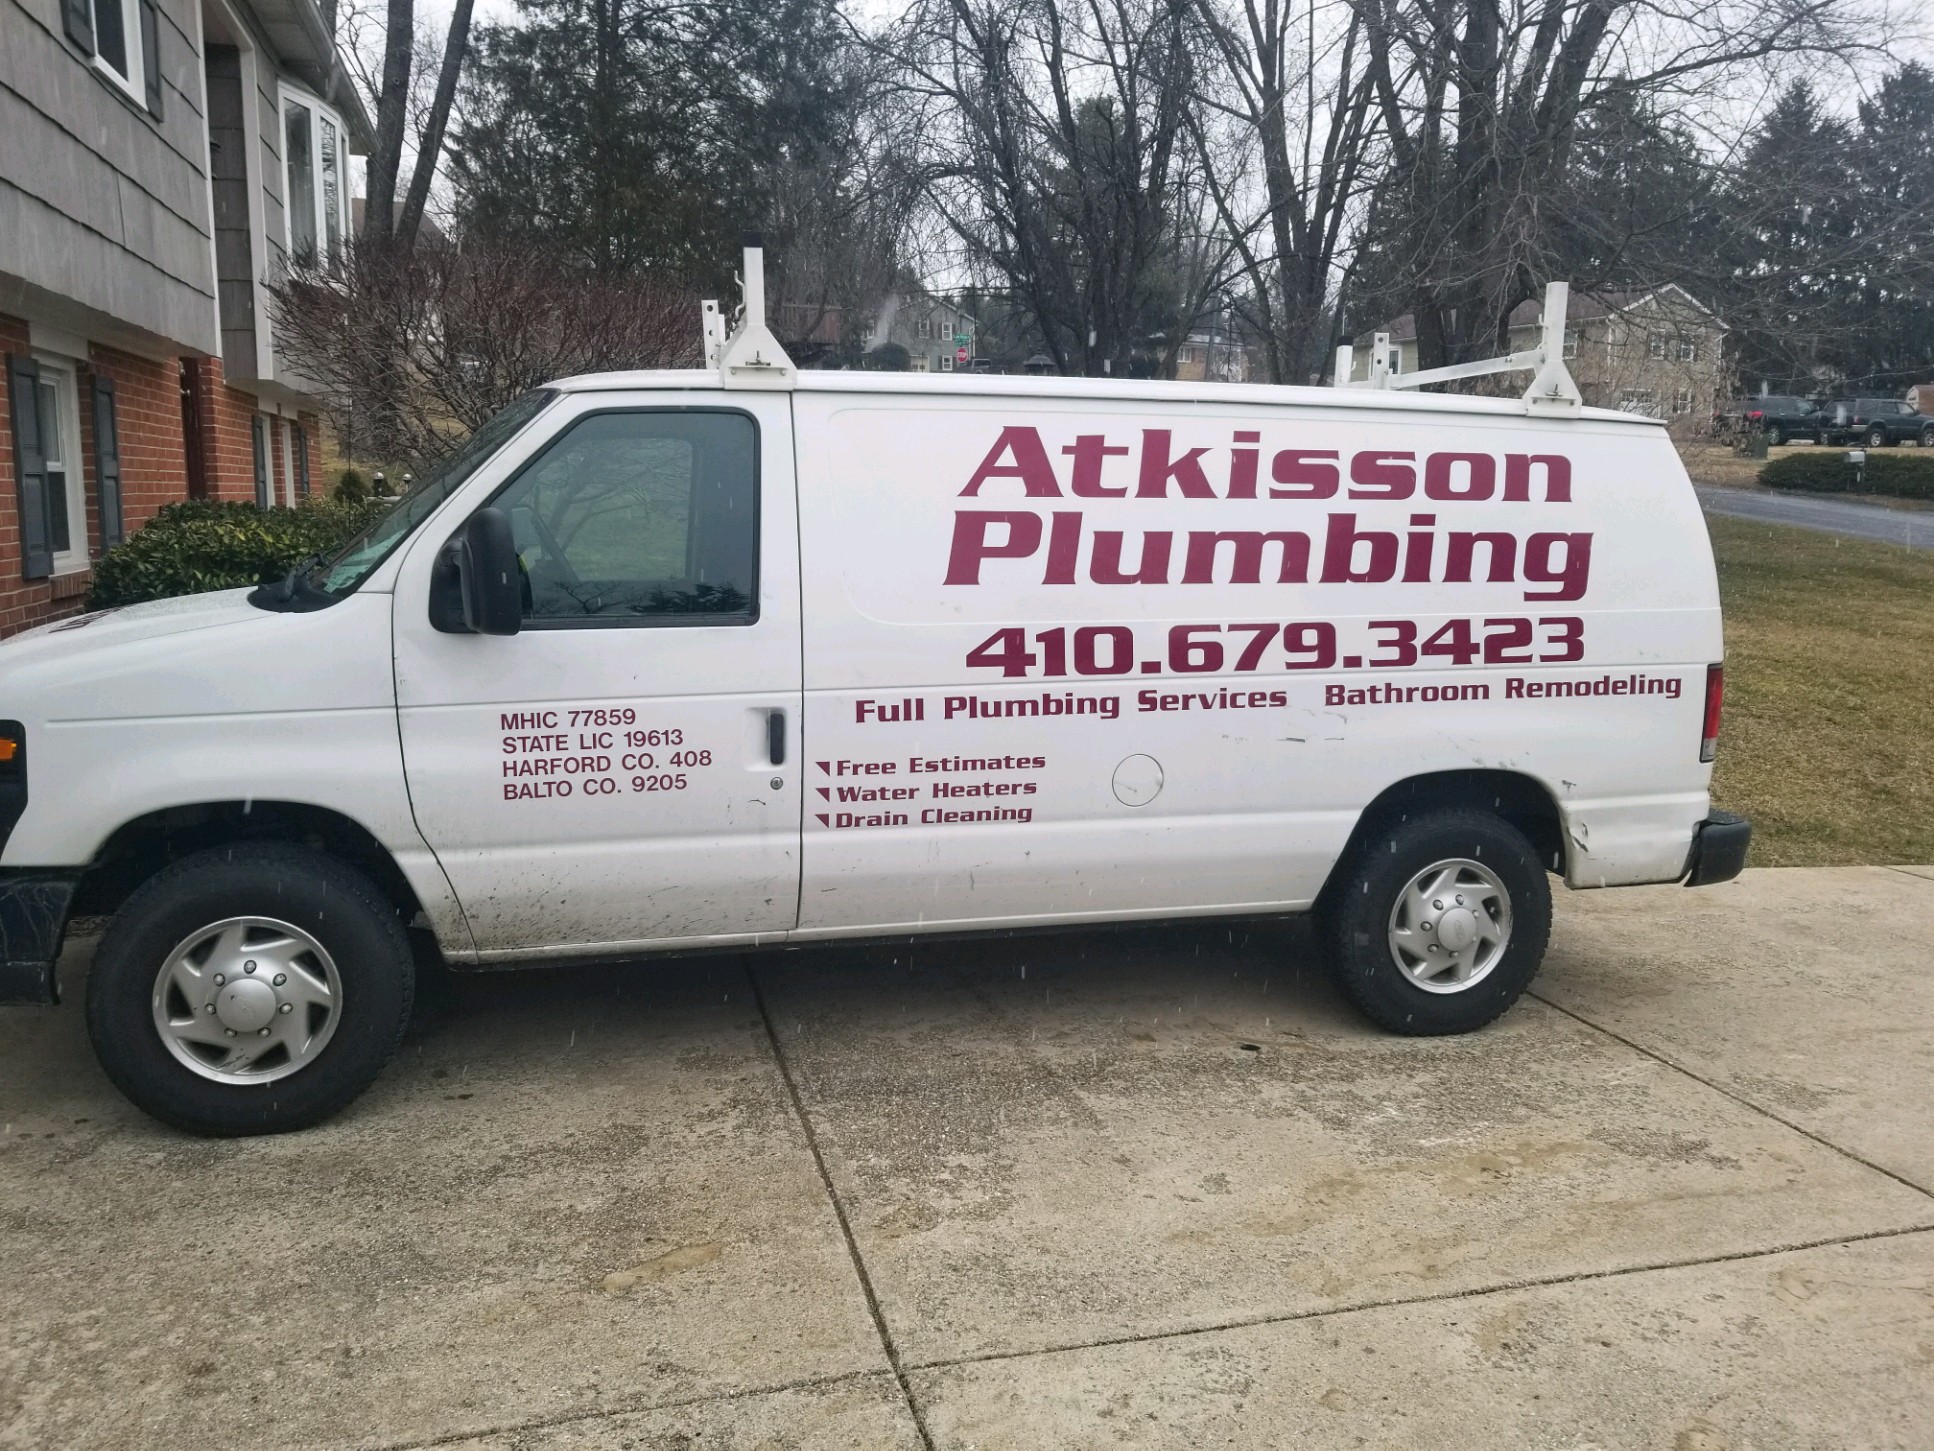 Atkisson Plumbing & Heating 2902 Cornus Way, Joppatowne Maryland 21085